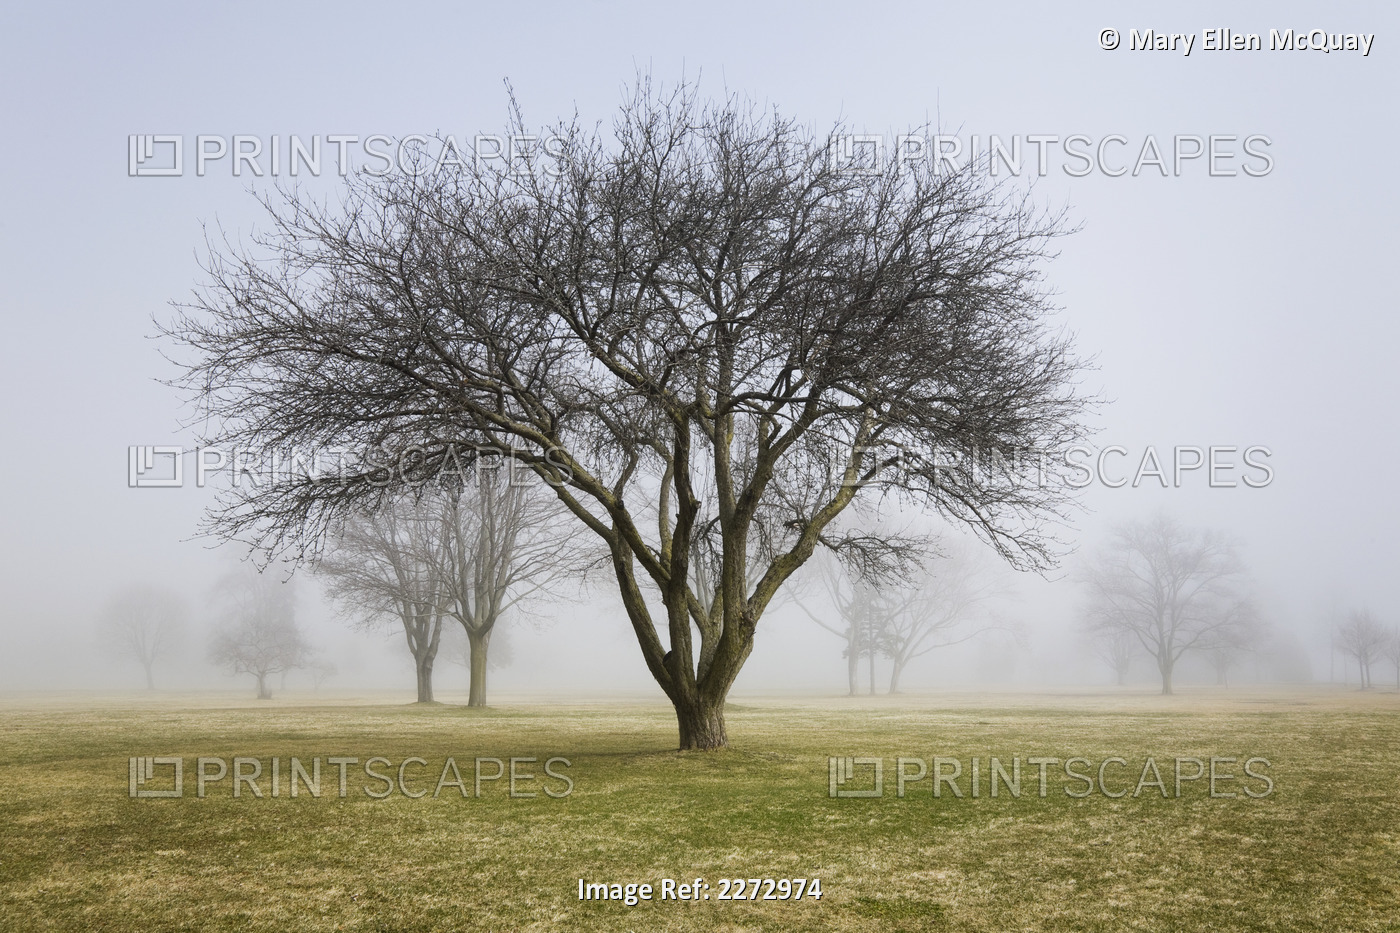 Trees shrouded in mist in springtime; ontario canada